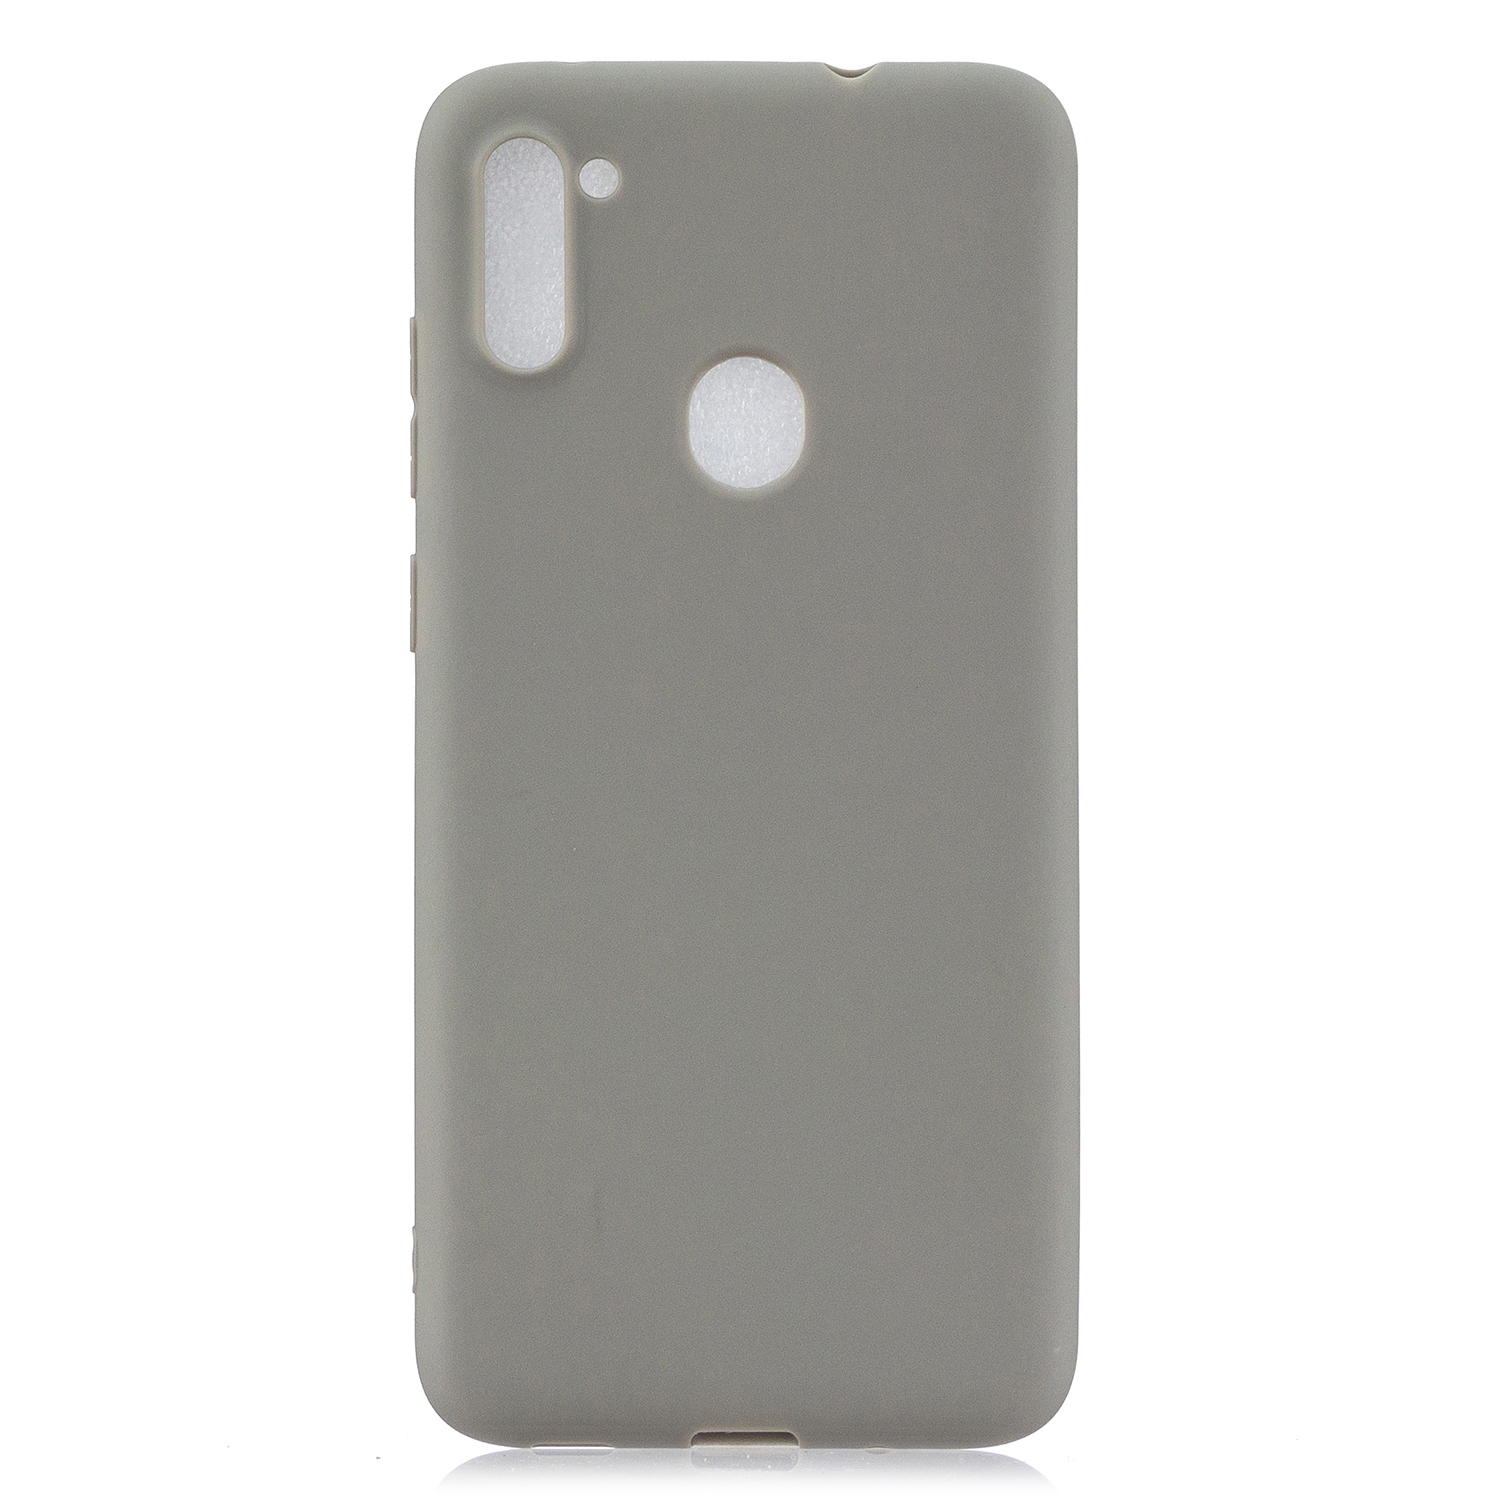 For Samsung A01/ A11/A21/A41/A51/A71/A81/A91 Mobile Phone Case Lovely Candy Color Matte TPU Anti-scratch Non-slip Protective Cover Back Case 12 gray